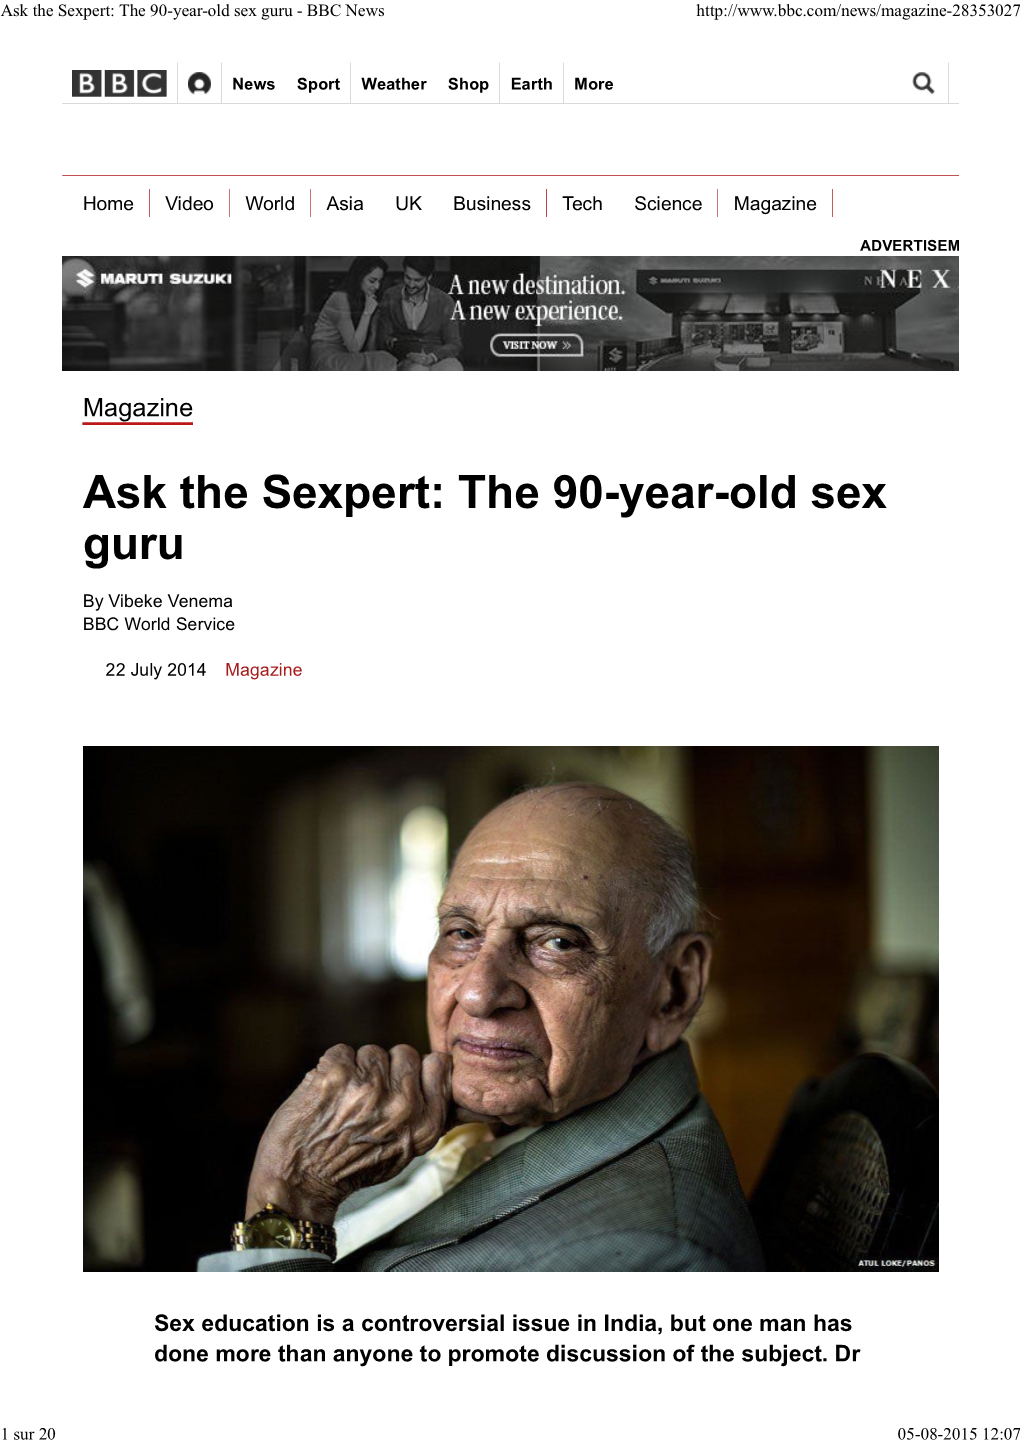 Ask the Sexpert: the 90-Year-Old Sex Guru - BBC News